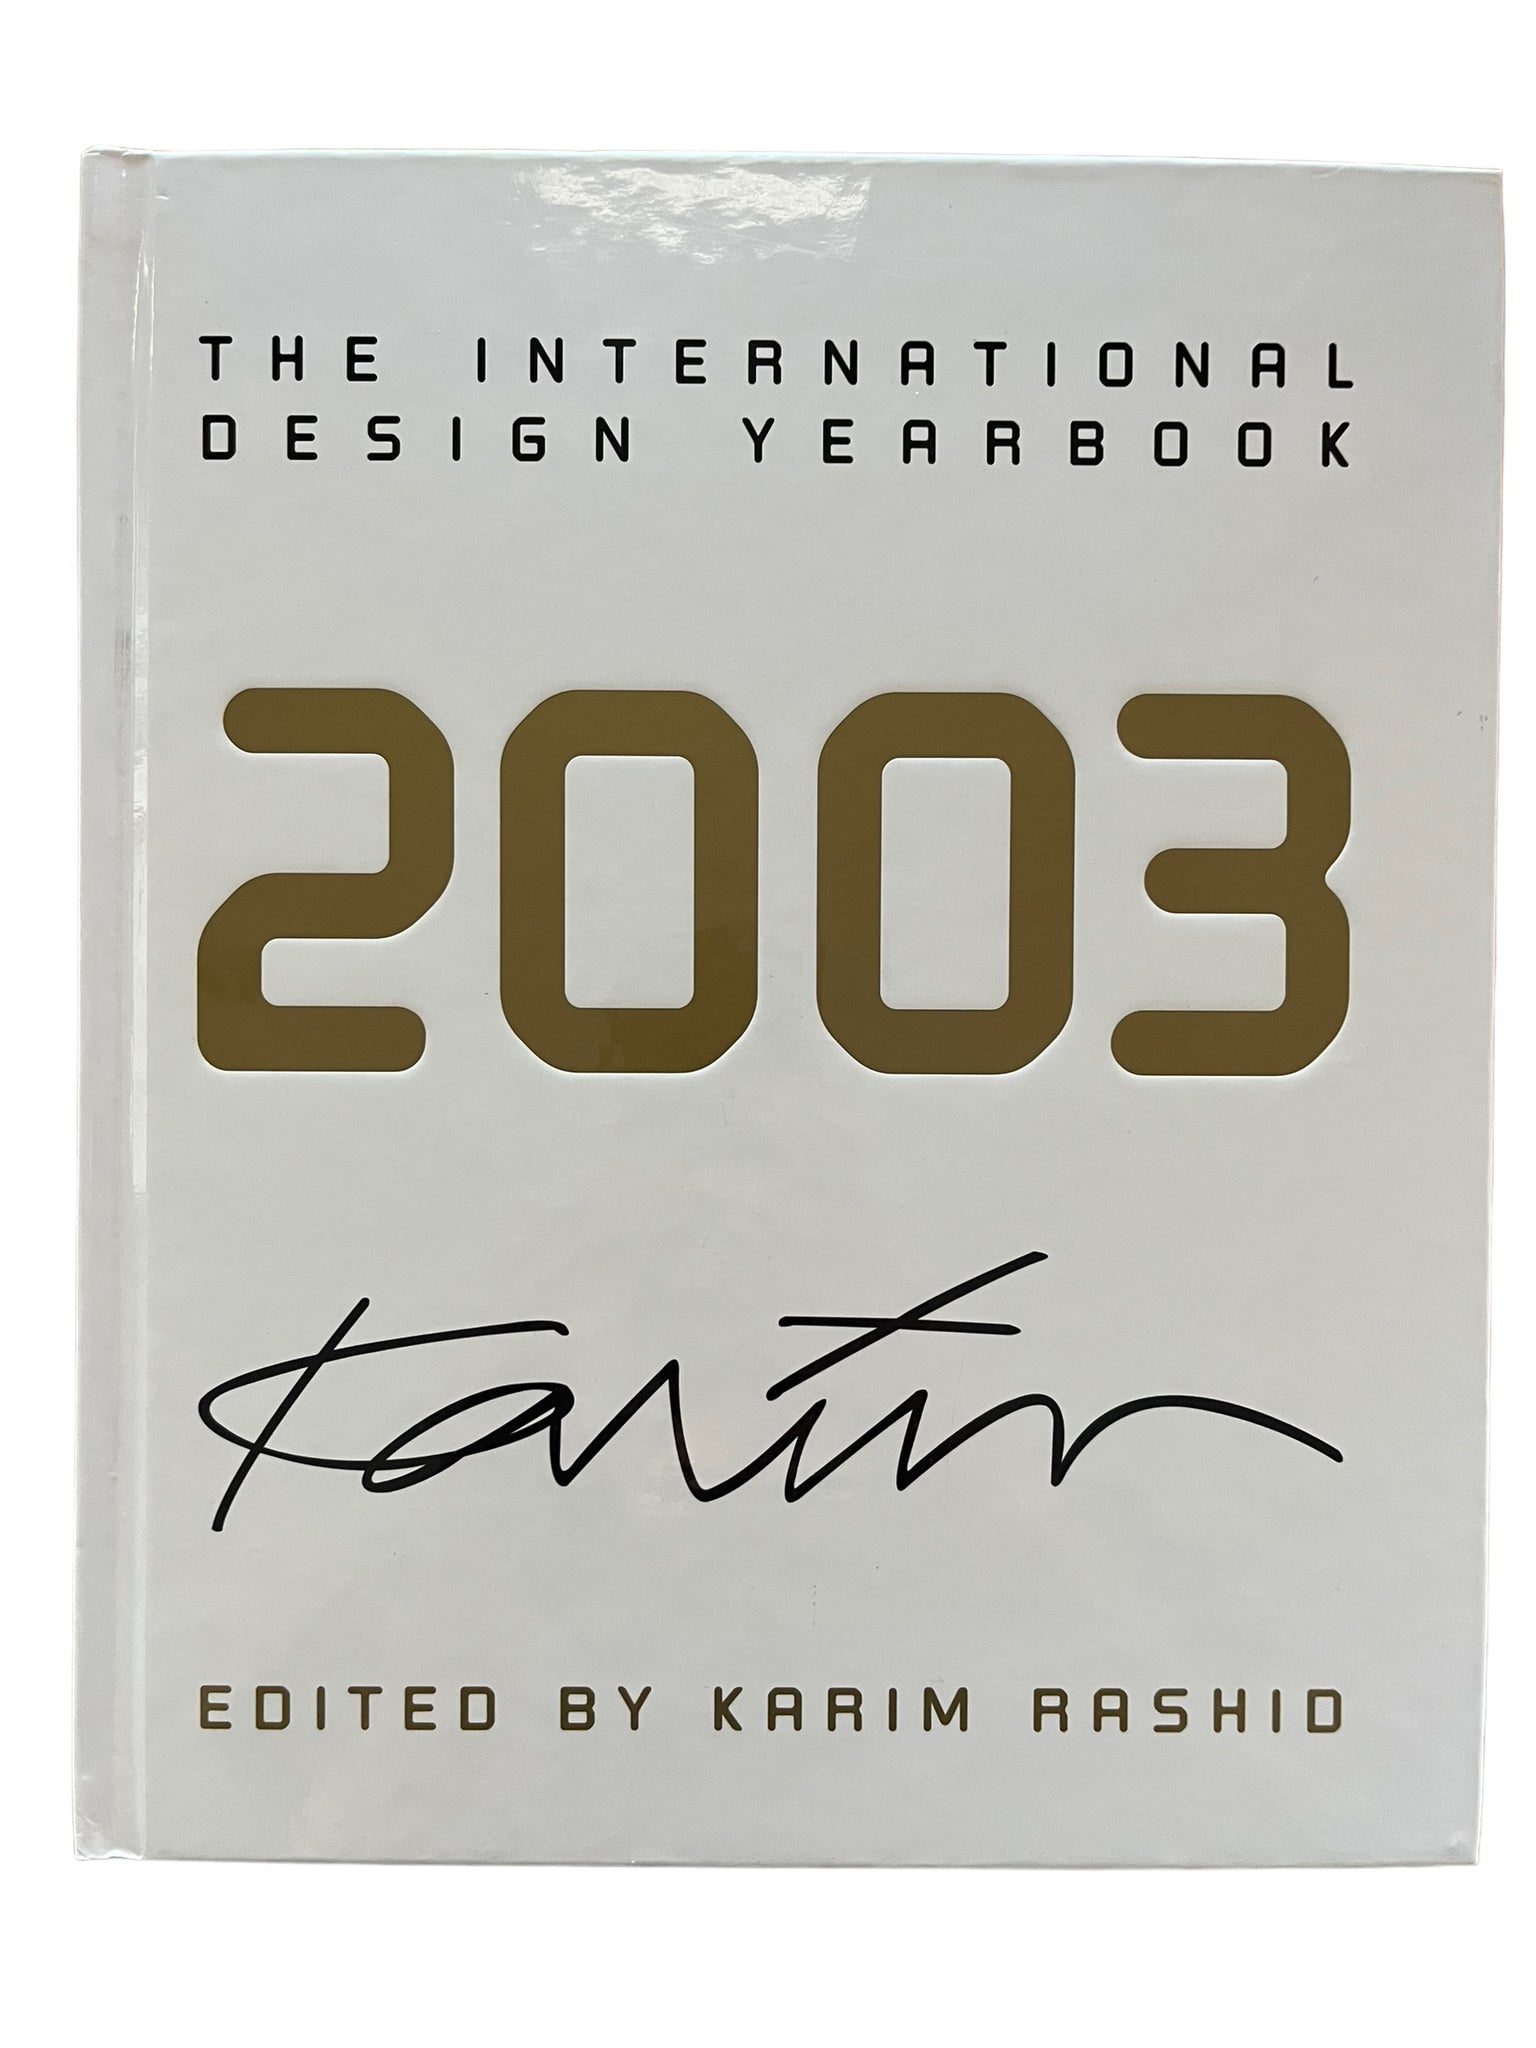 The International Design Yearbook 2003 - Karim Rashid